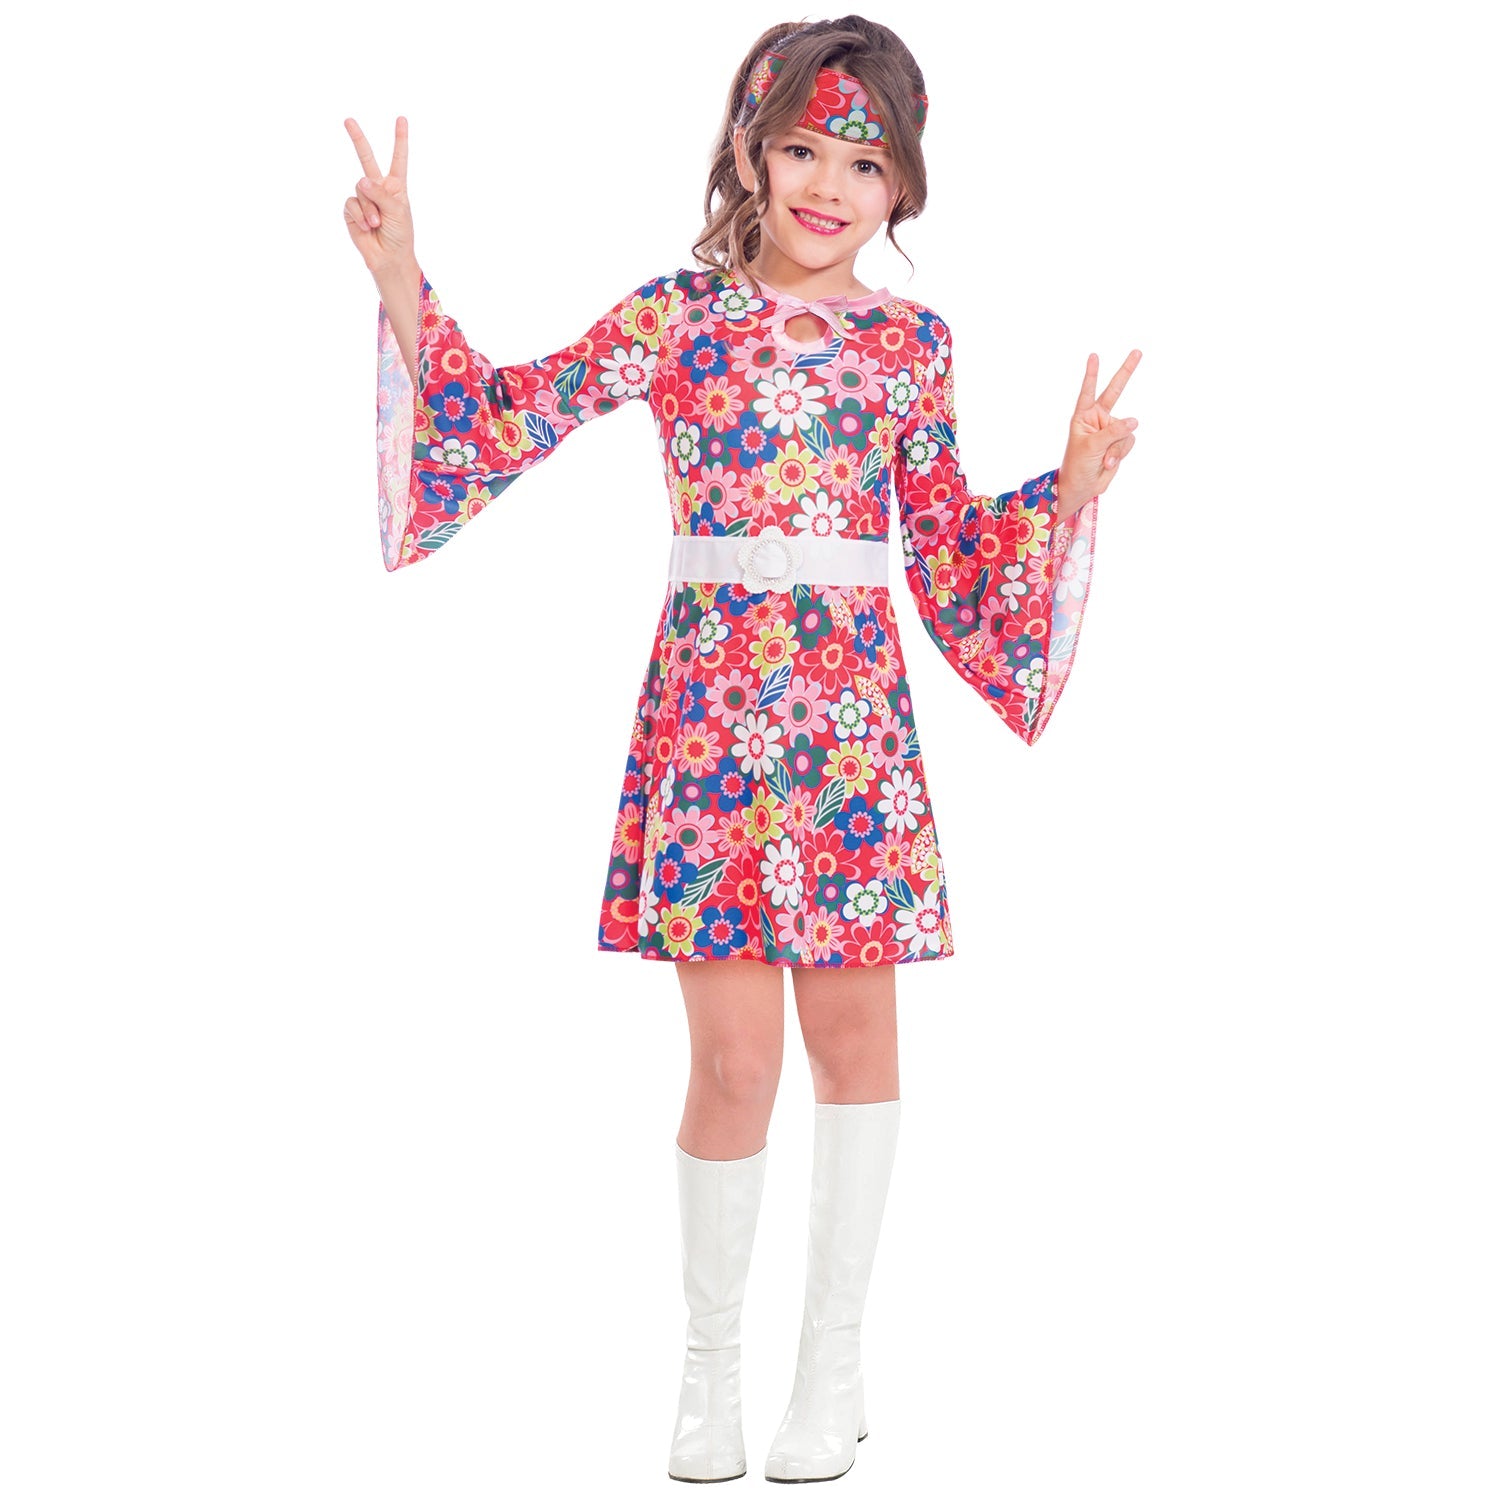 Girls Miss 60s Flower Power Hippie Costume includes dress, belt and headpiece